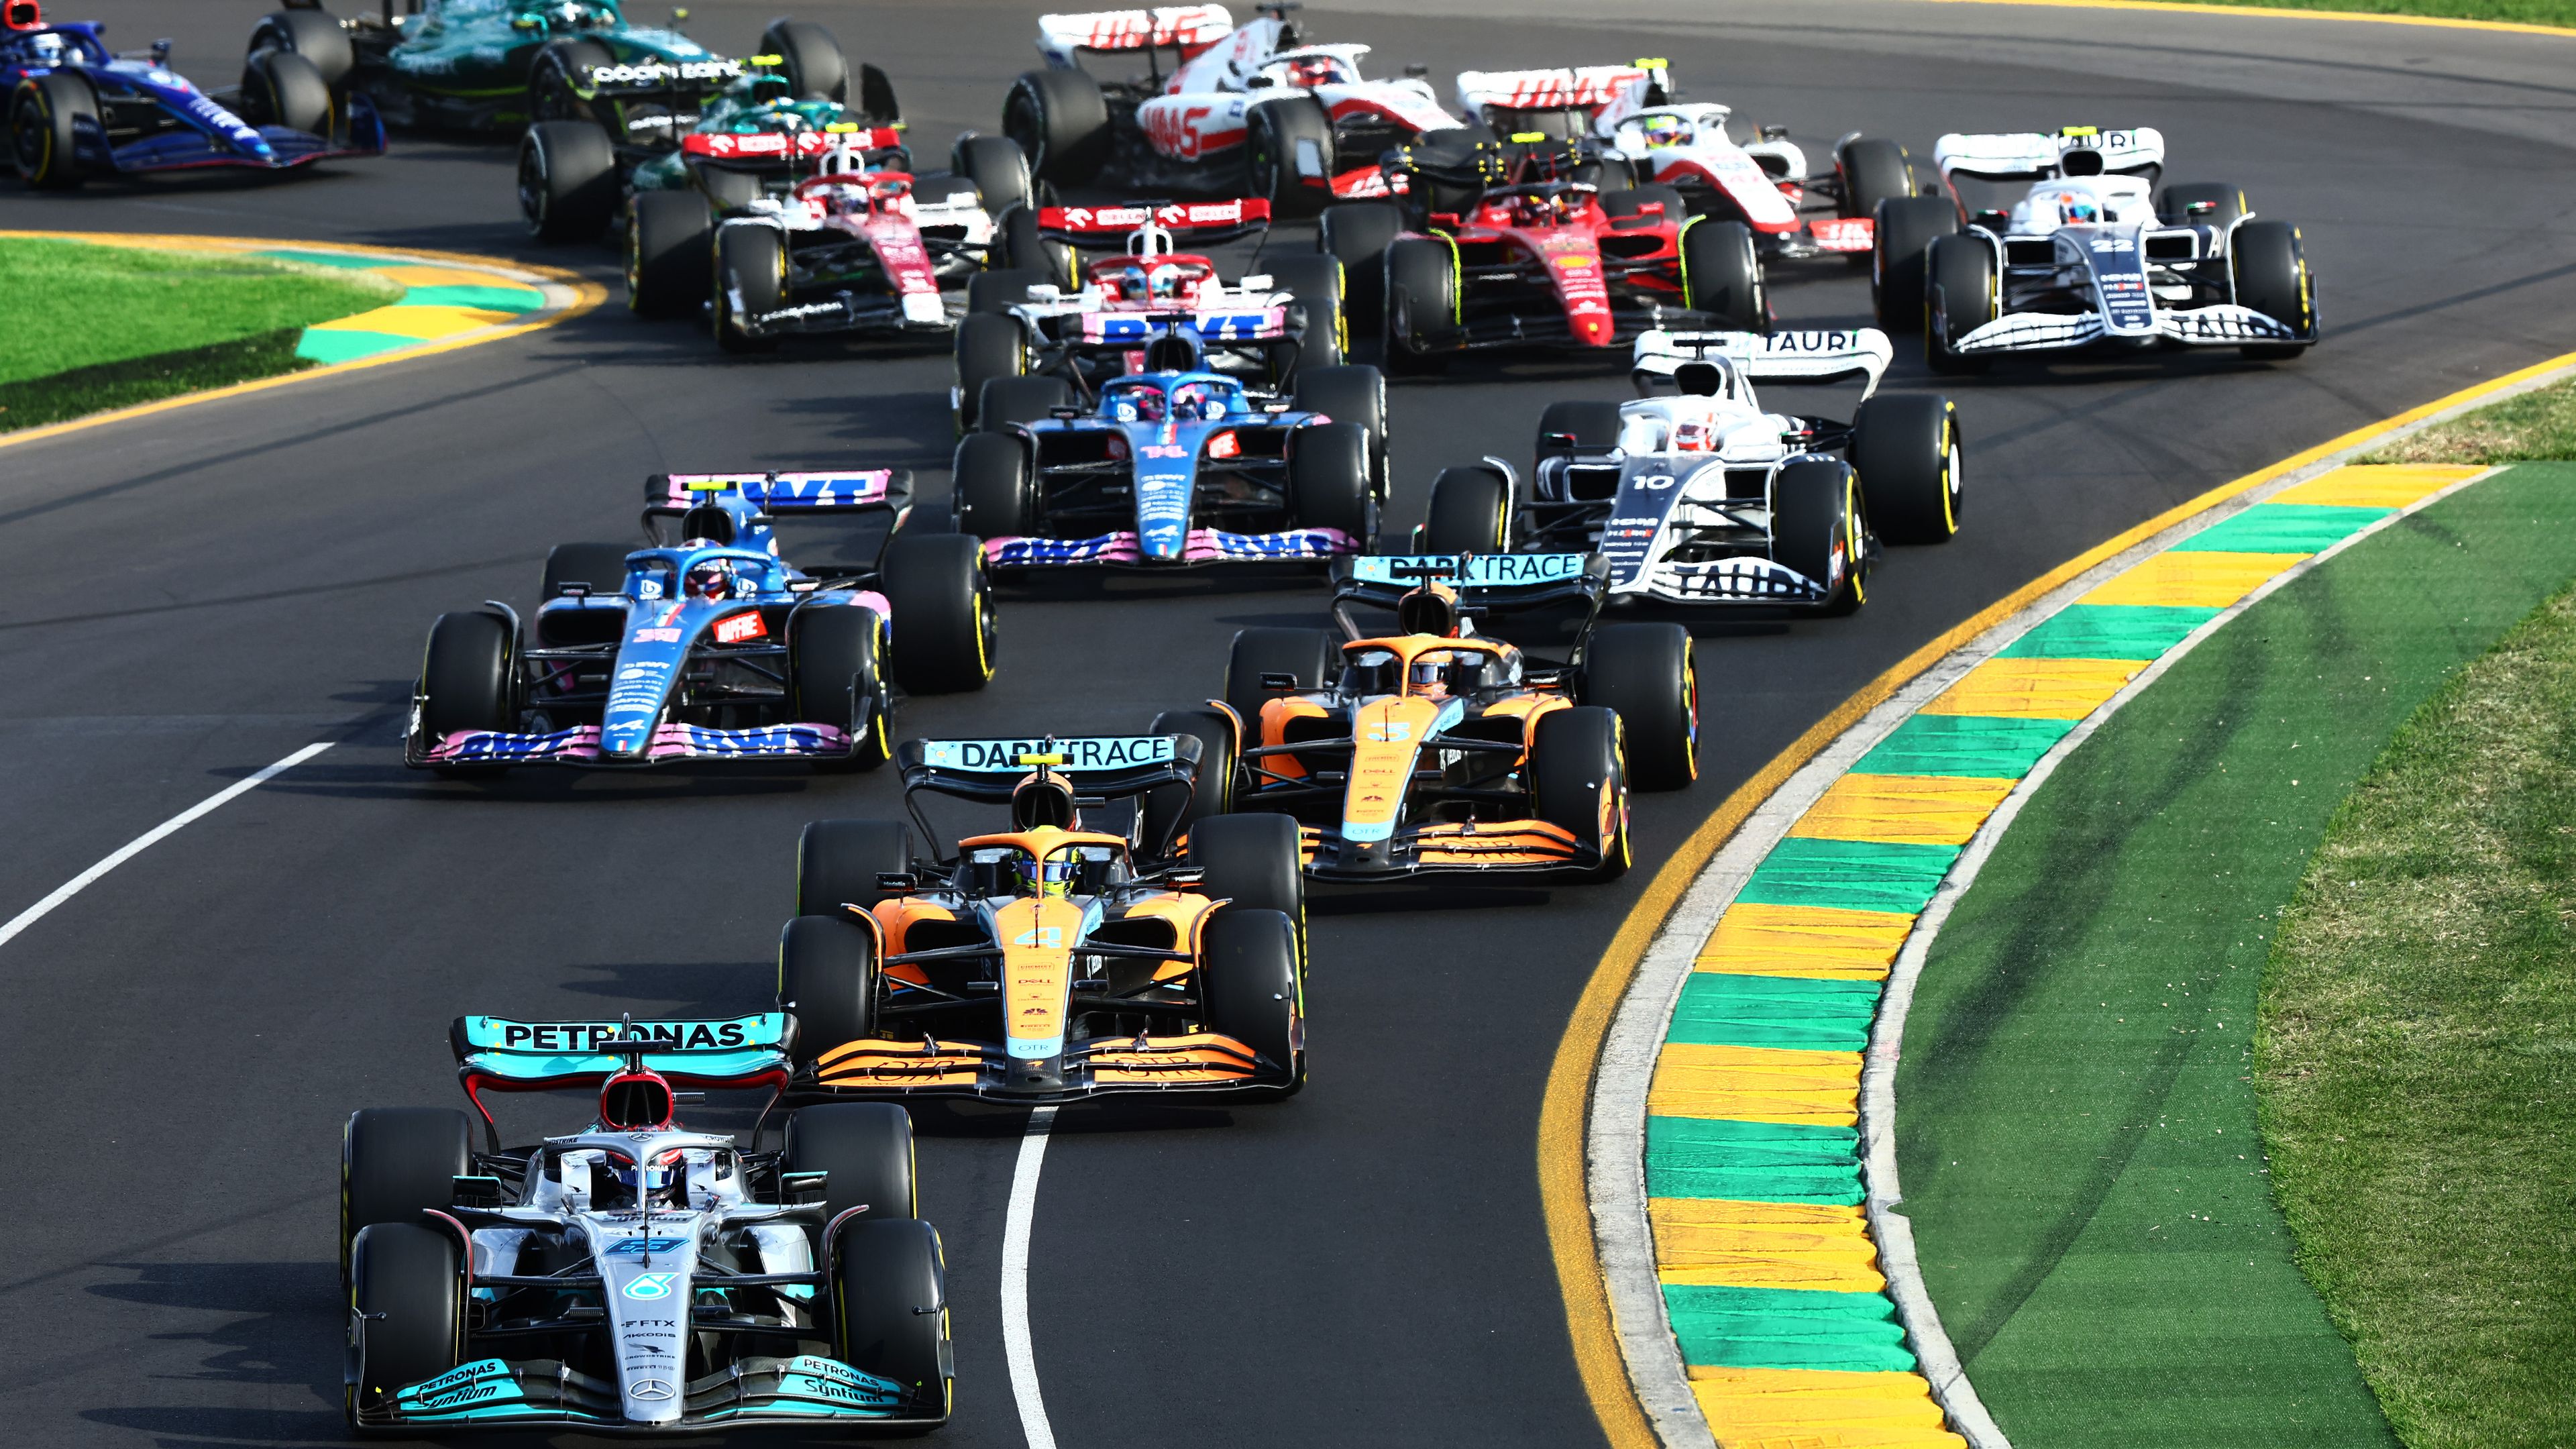 'Be sensible': Daniel Ricciardo ordered not to pass struggling teammate at Australian Grand Prix